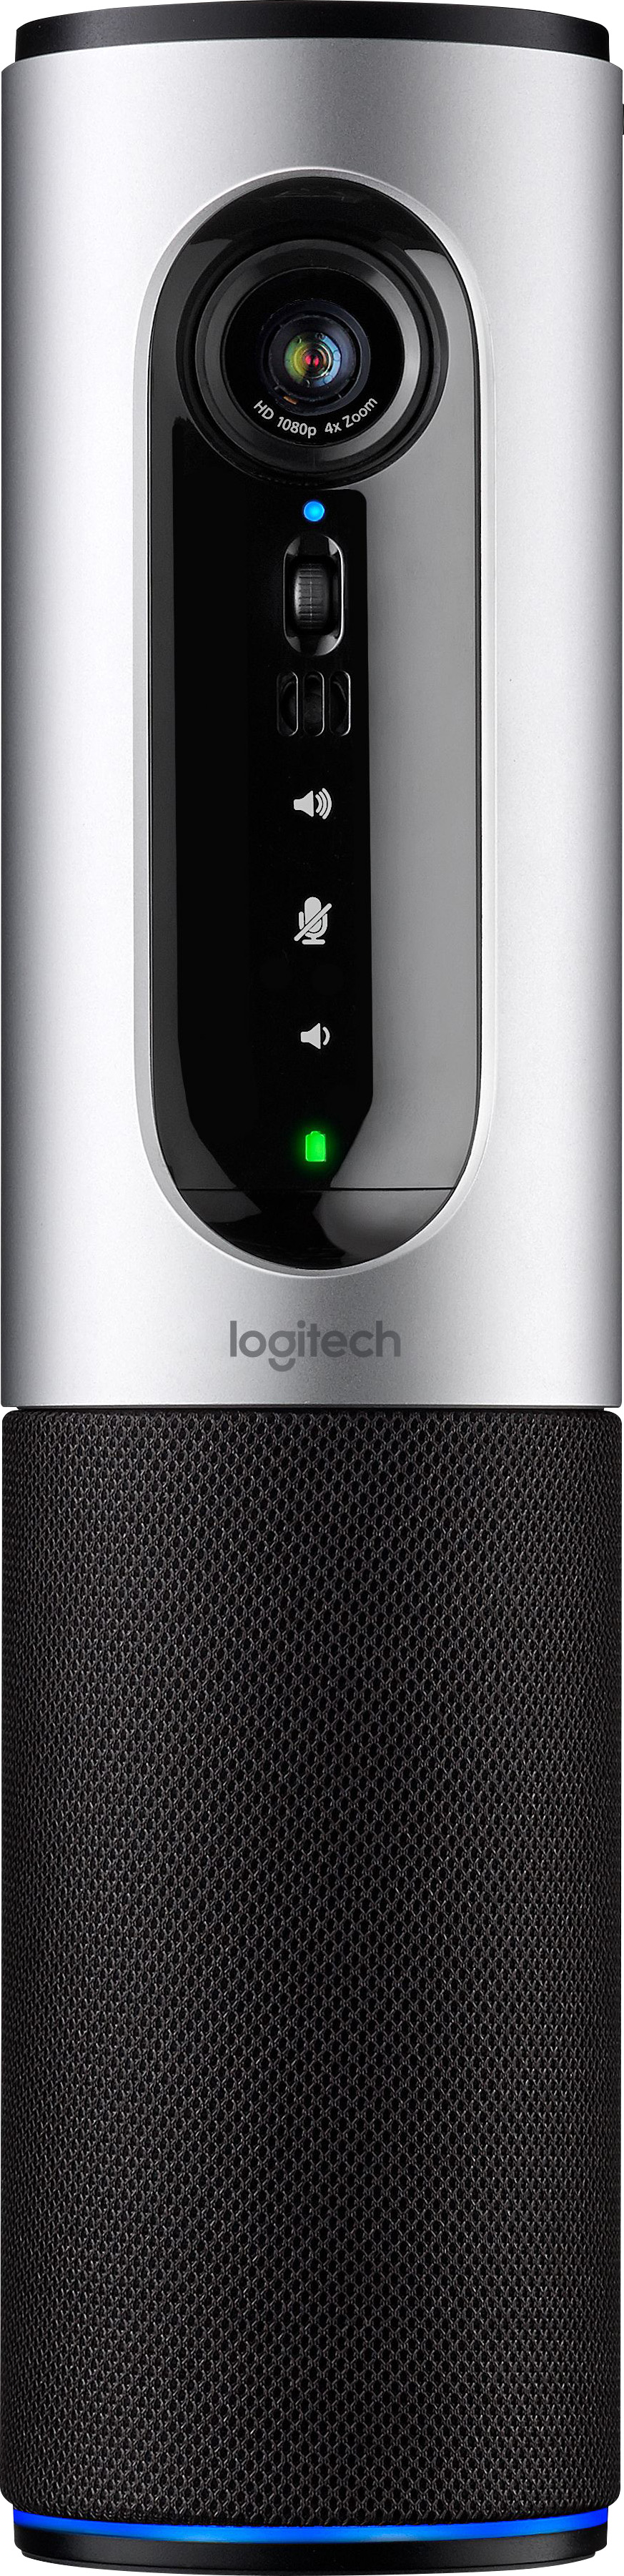 Logitech ConferenceCam CONNECT, HD 1080p 1920x1080, USB, Bluetooth, Fernbedienung